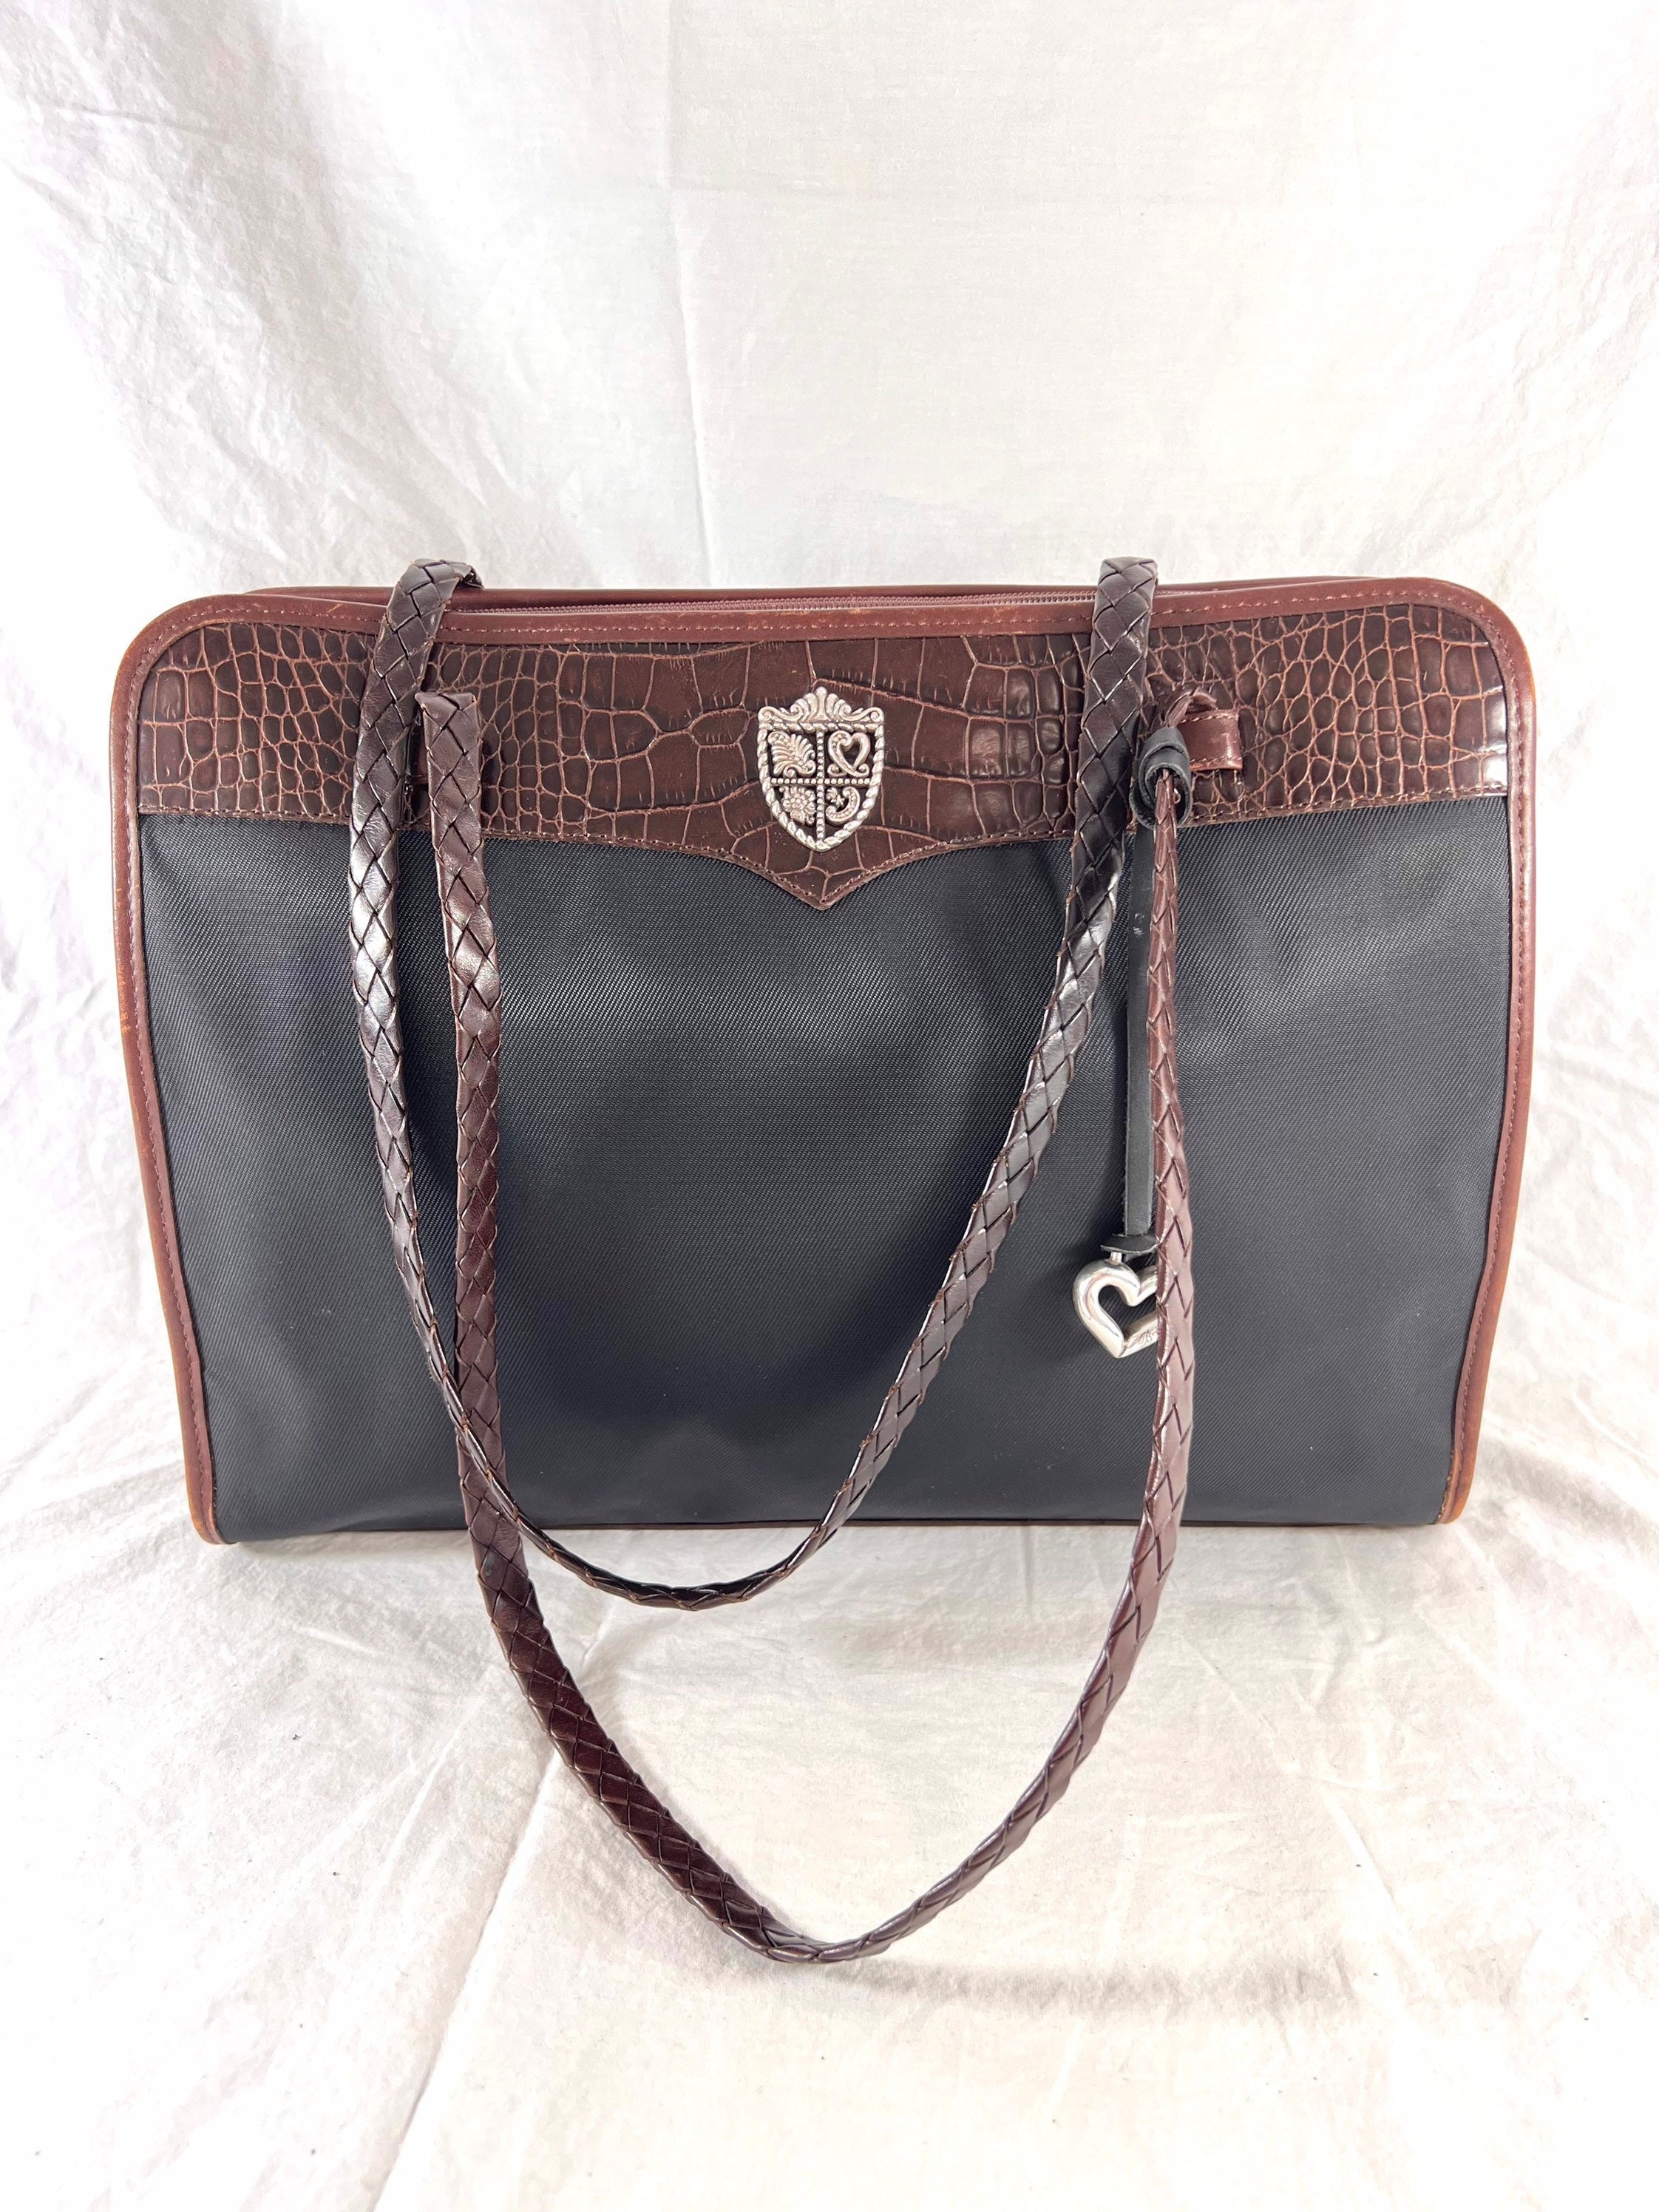 Brighton Vintage Gray Woven Raffia Shoulder Bag With Crystals & Beads